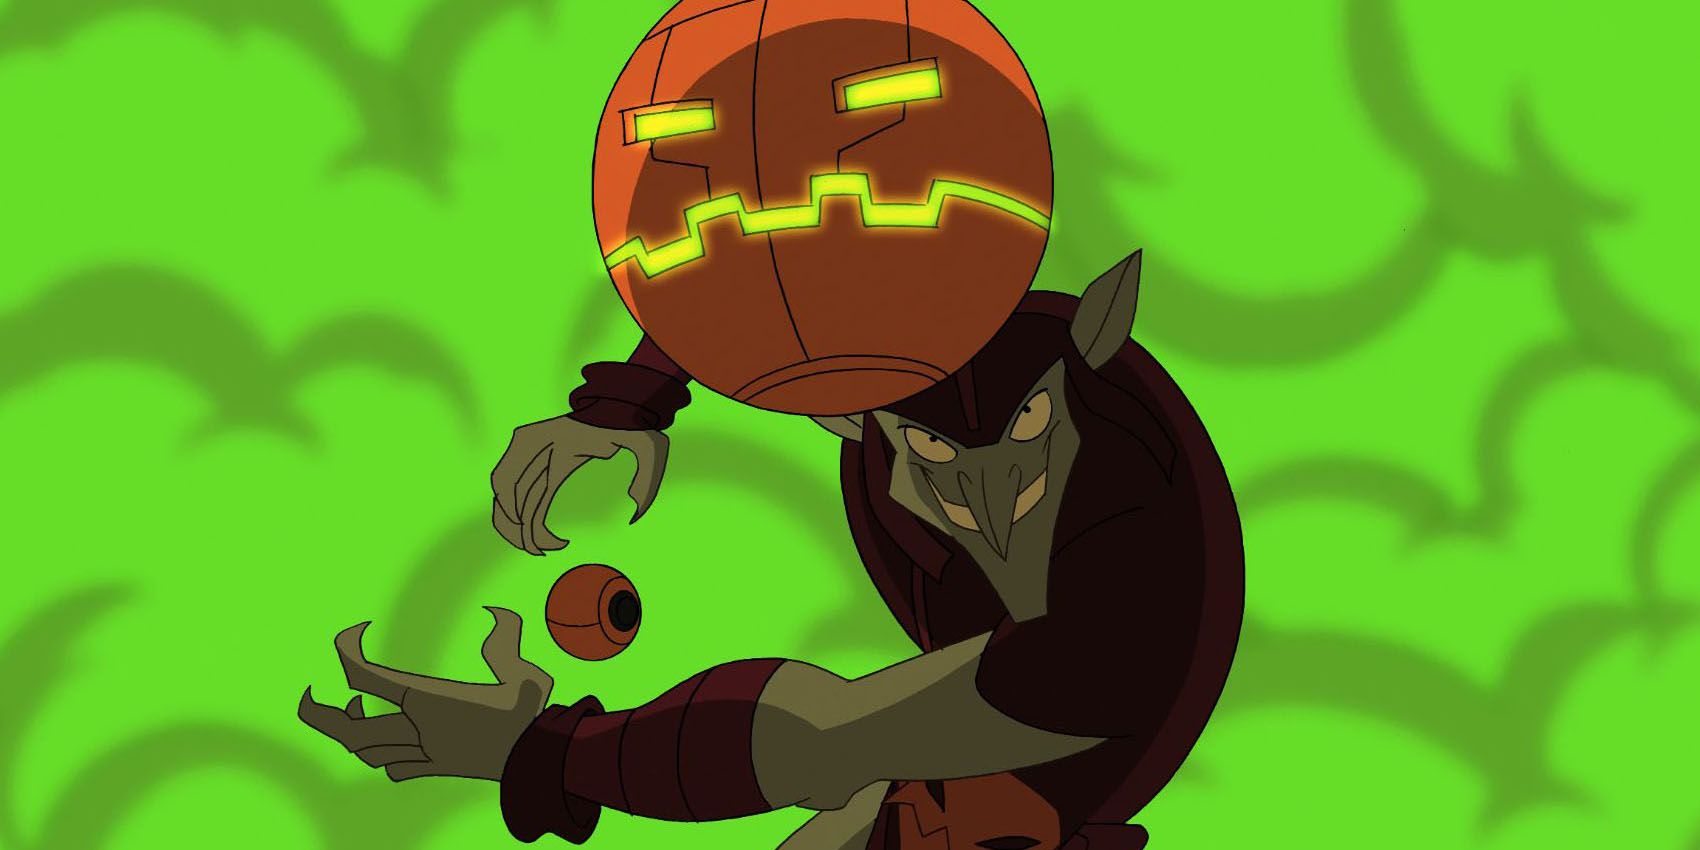 Green Goblin throws a pumpkin bomb